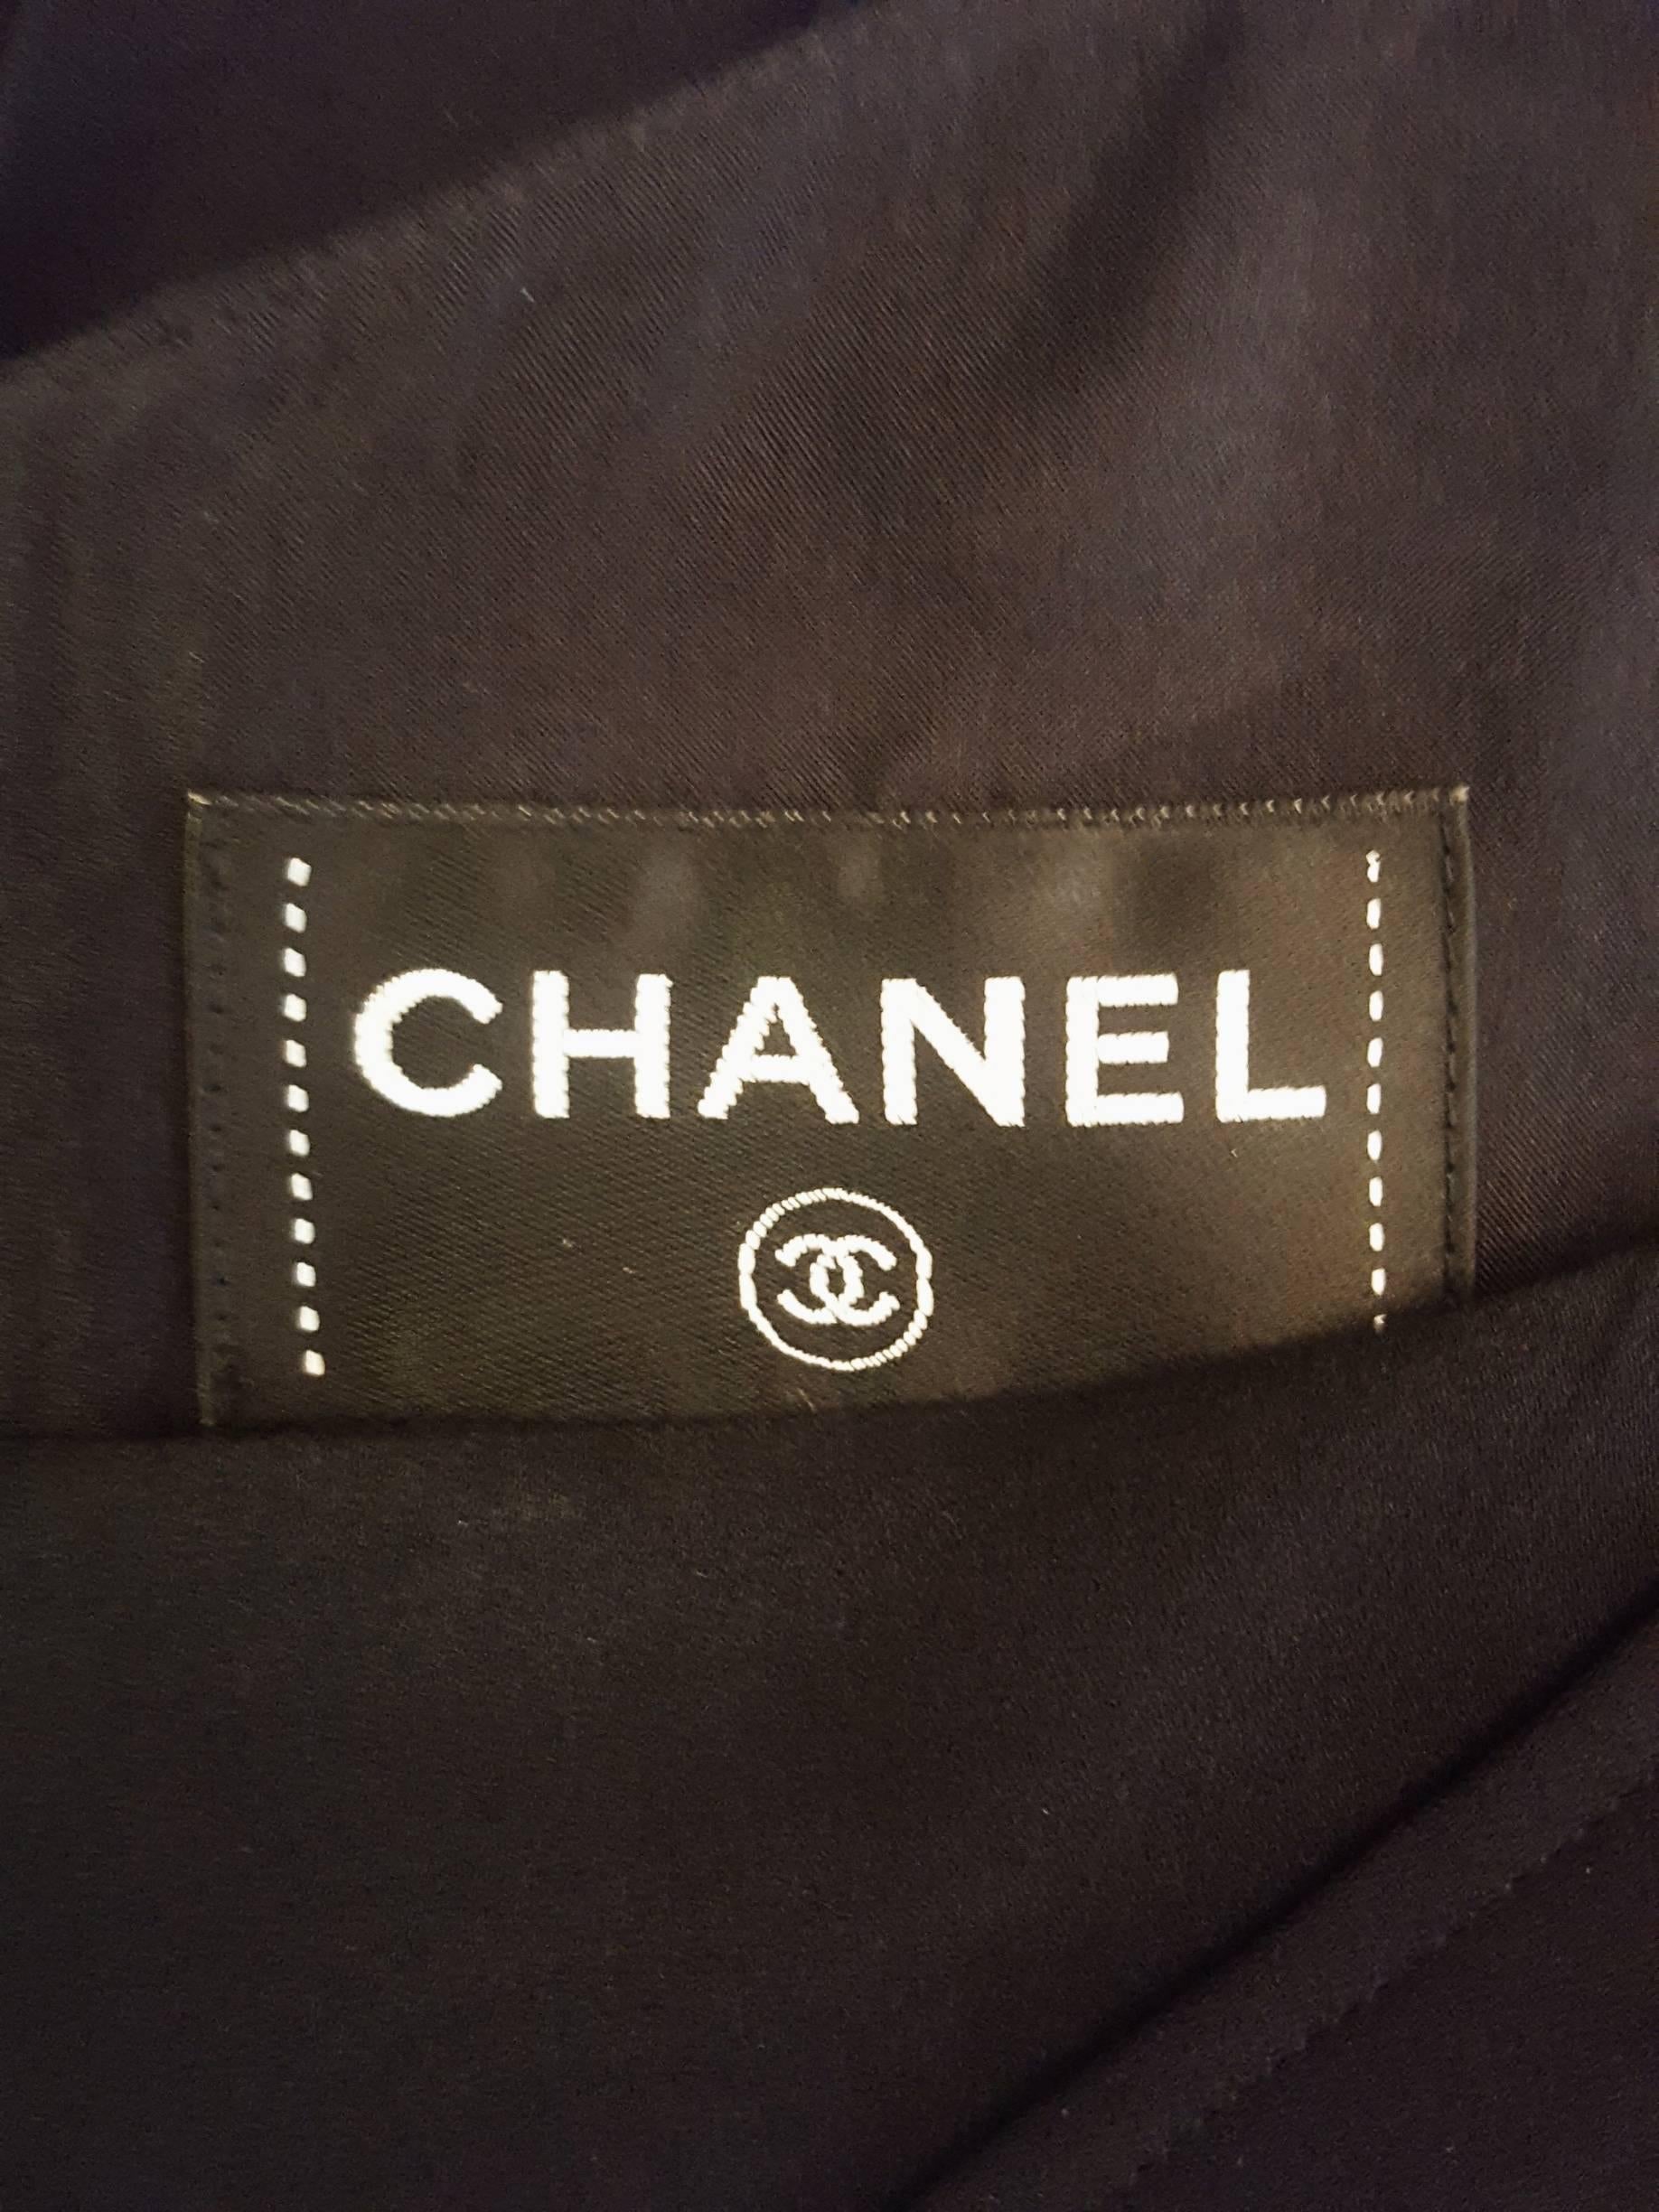 Classy Chanel Black Silk Dress with Drop Waist Crisscross Detail at Neckline For Sale 2